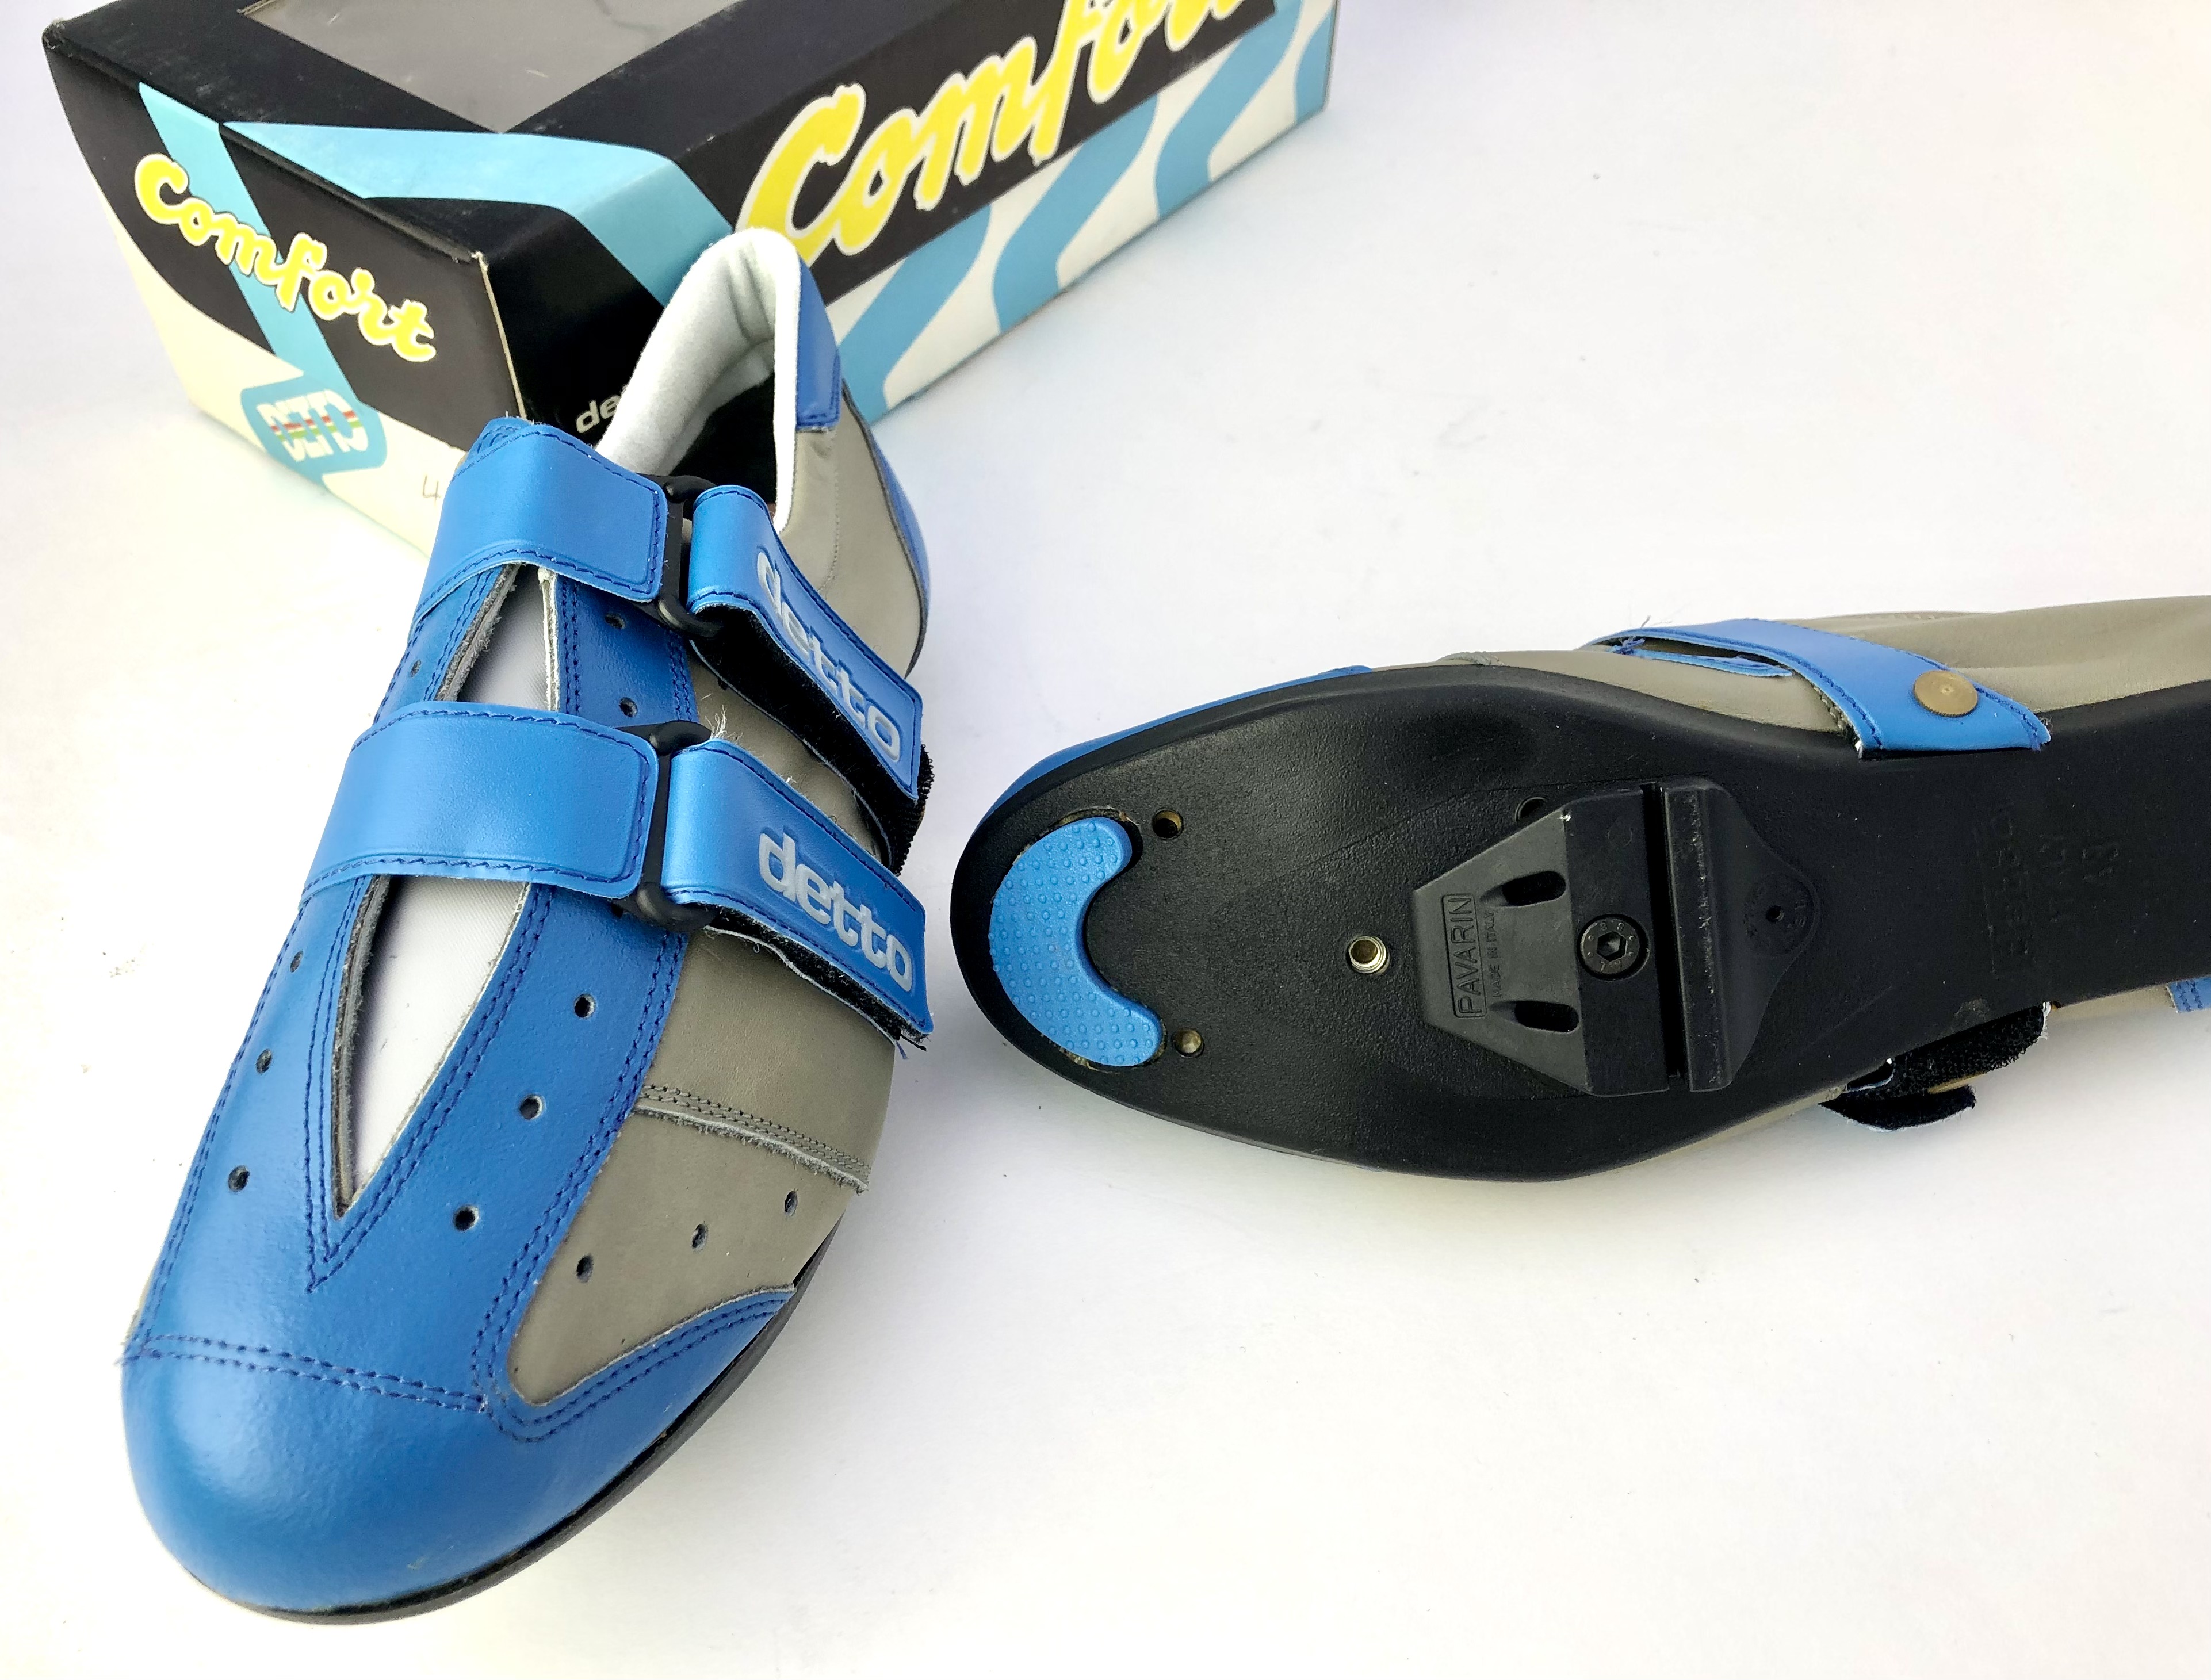 NOS Vintage Detto Pietro Mod. 230 Comfort Blu Cycling Shoes Size 42